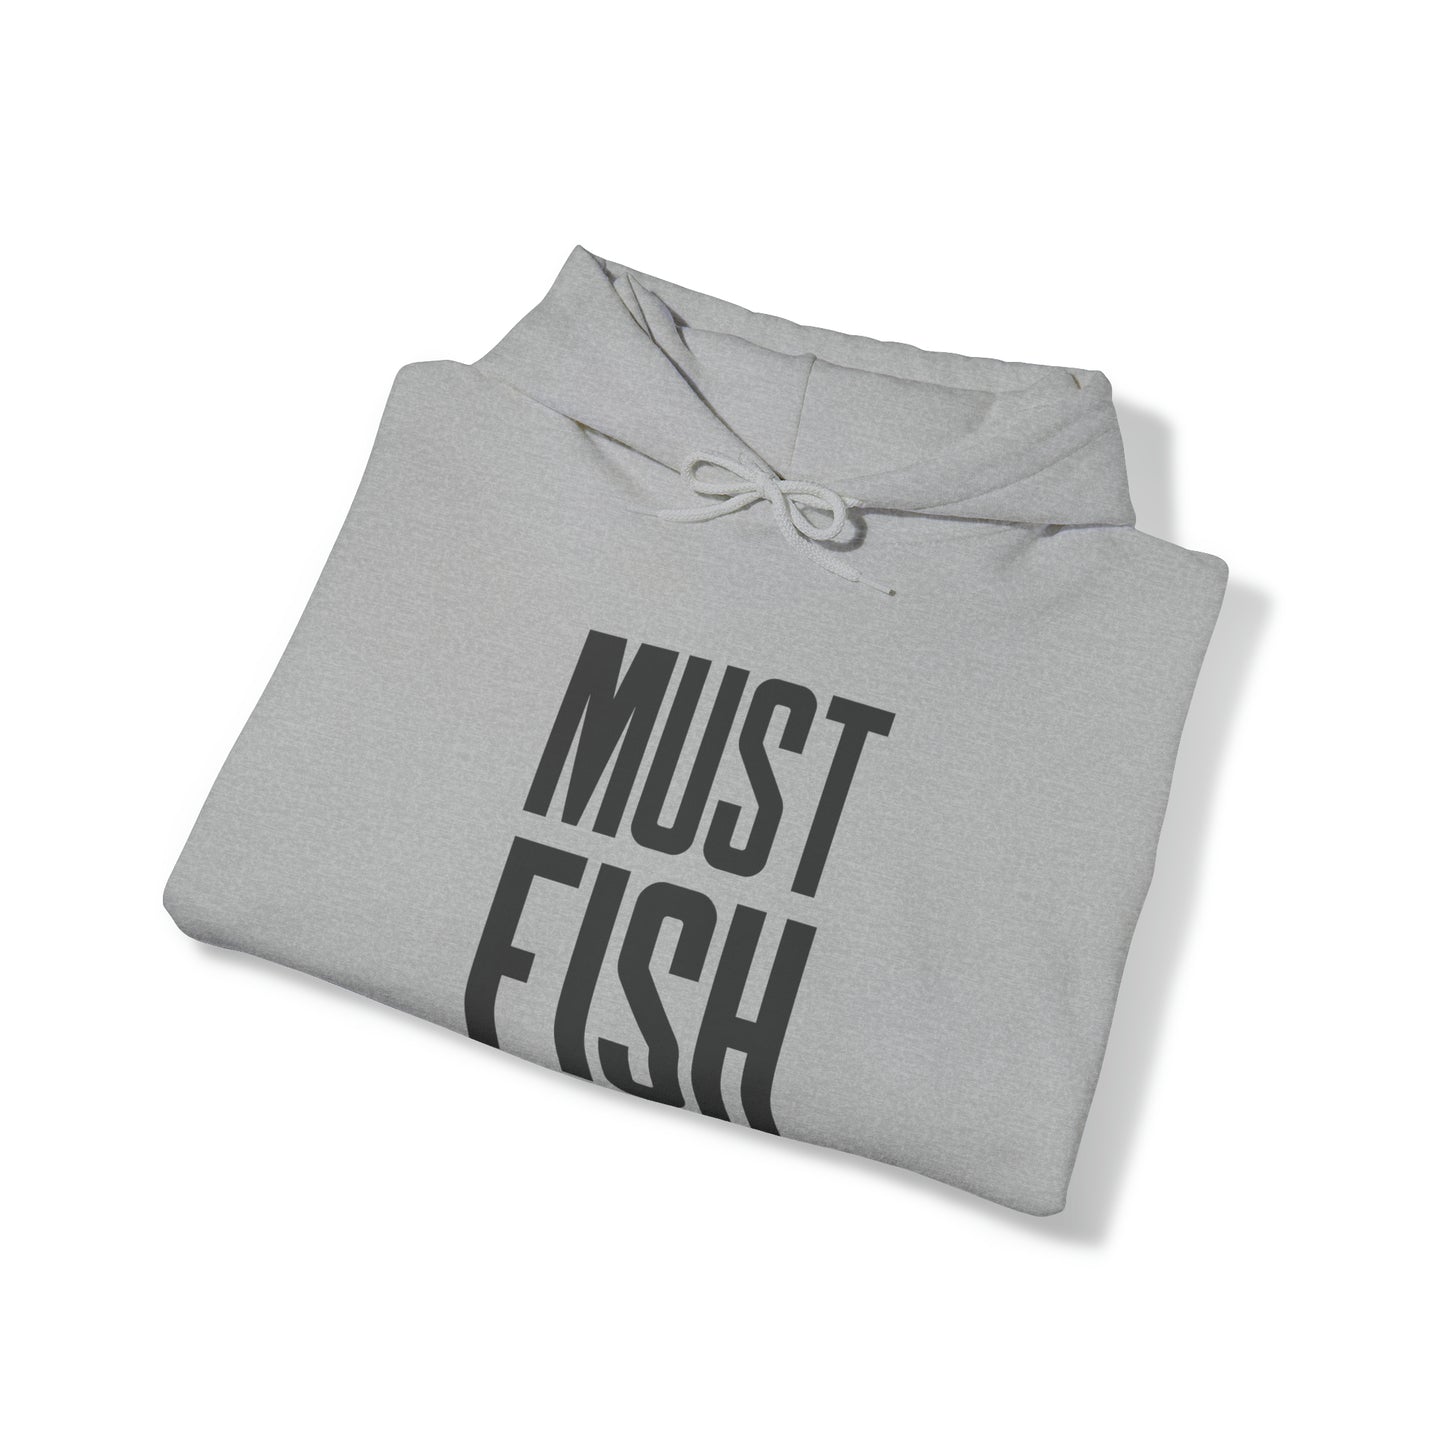 Must Fish (everything else is optional) Hoodie